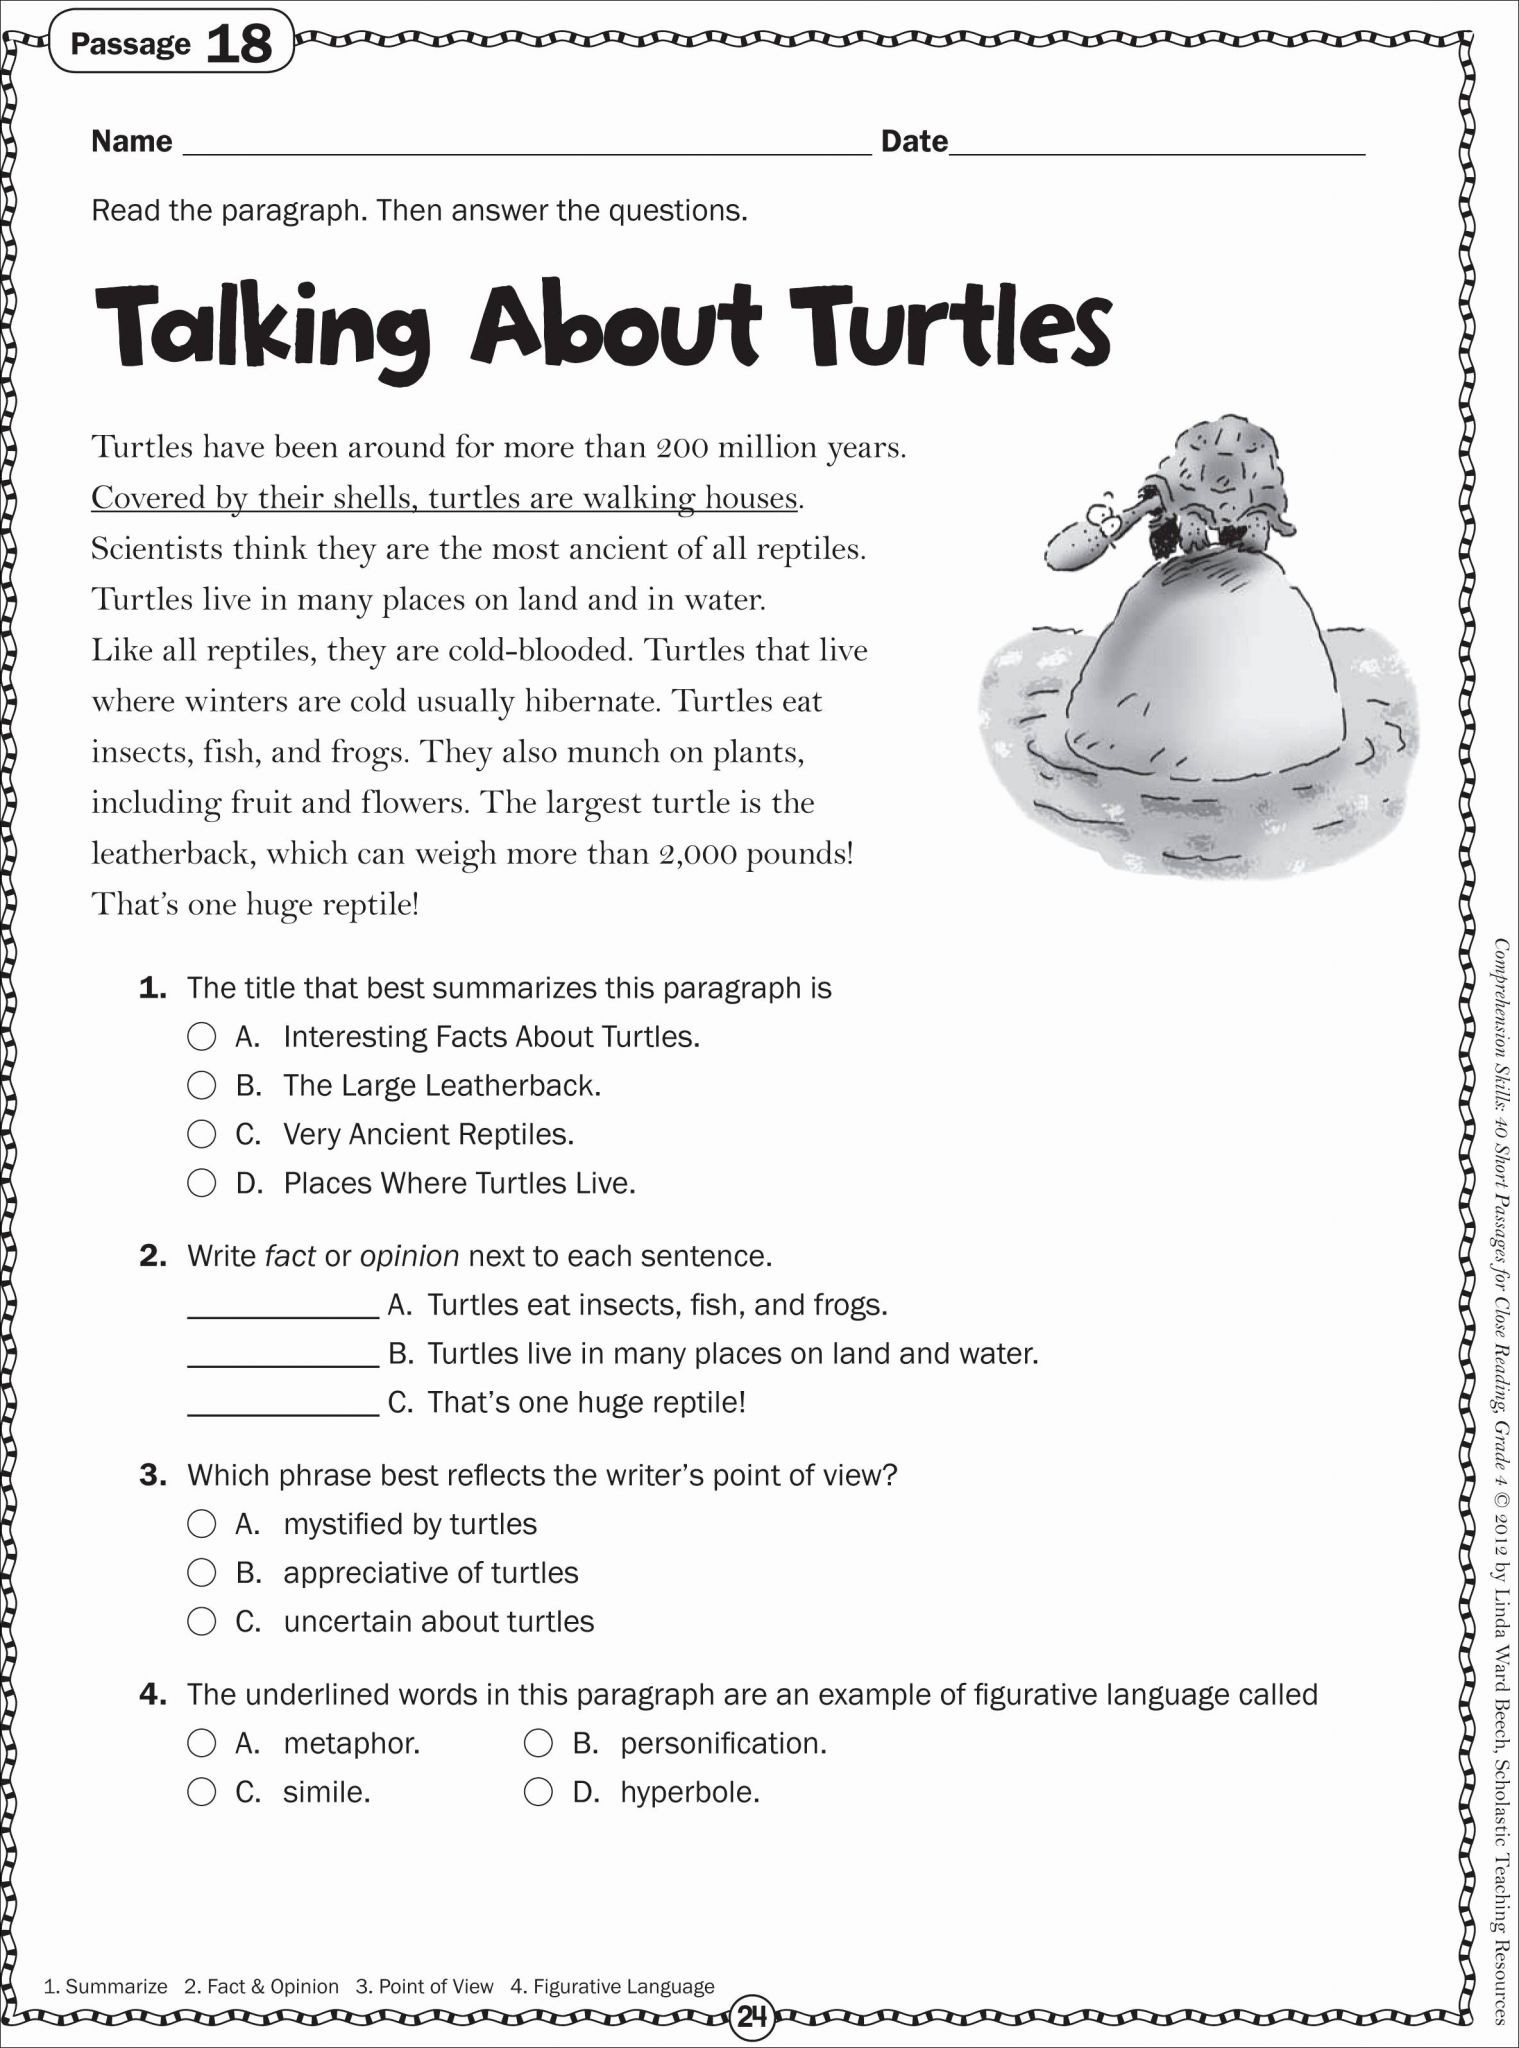 Animals Worksheets Preschool for Kids